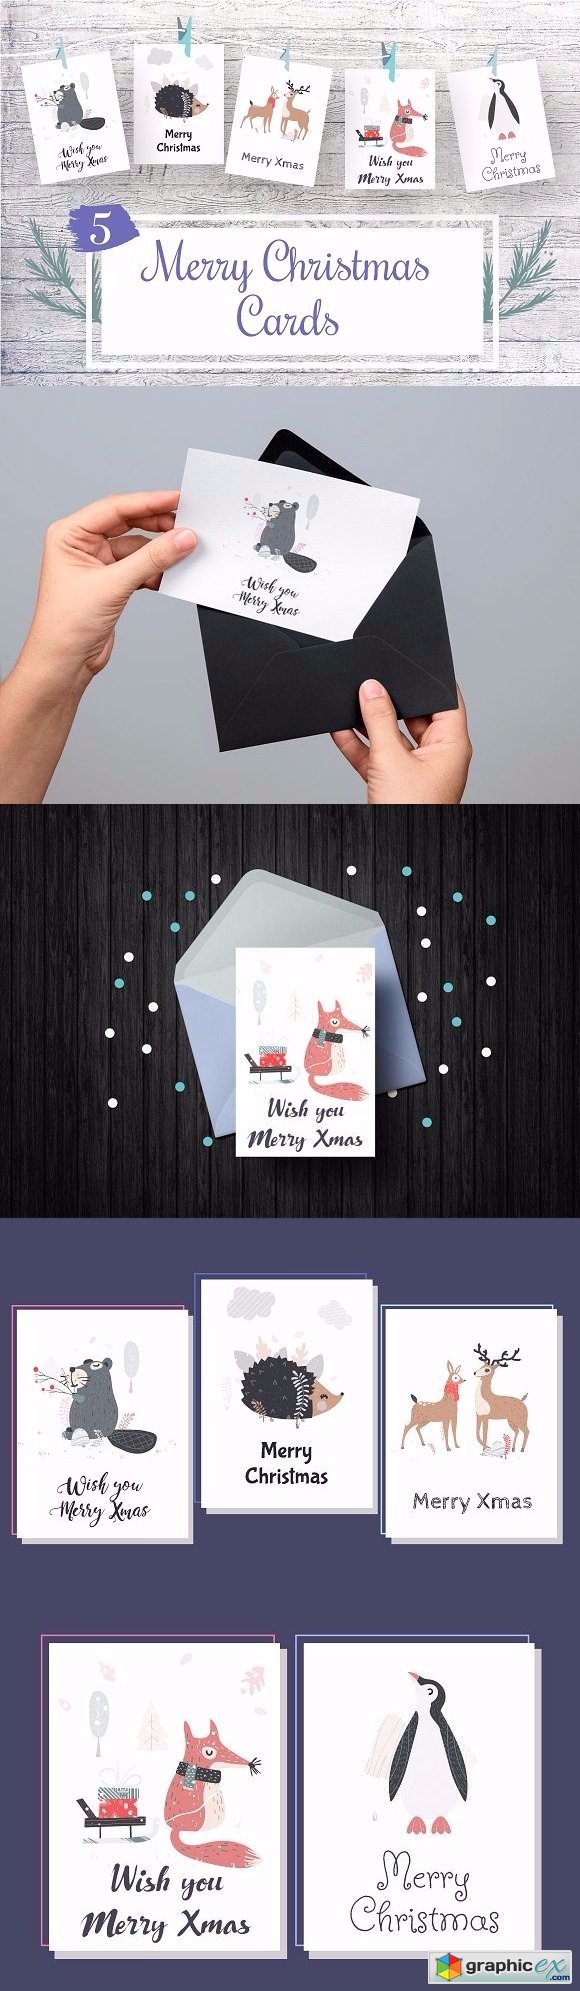 5 Merry Christmas Cards